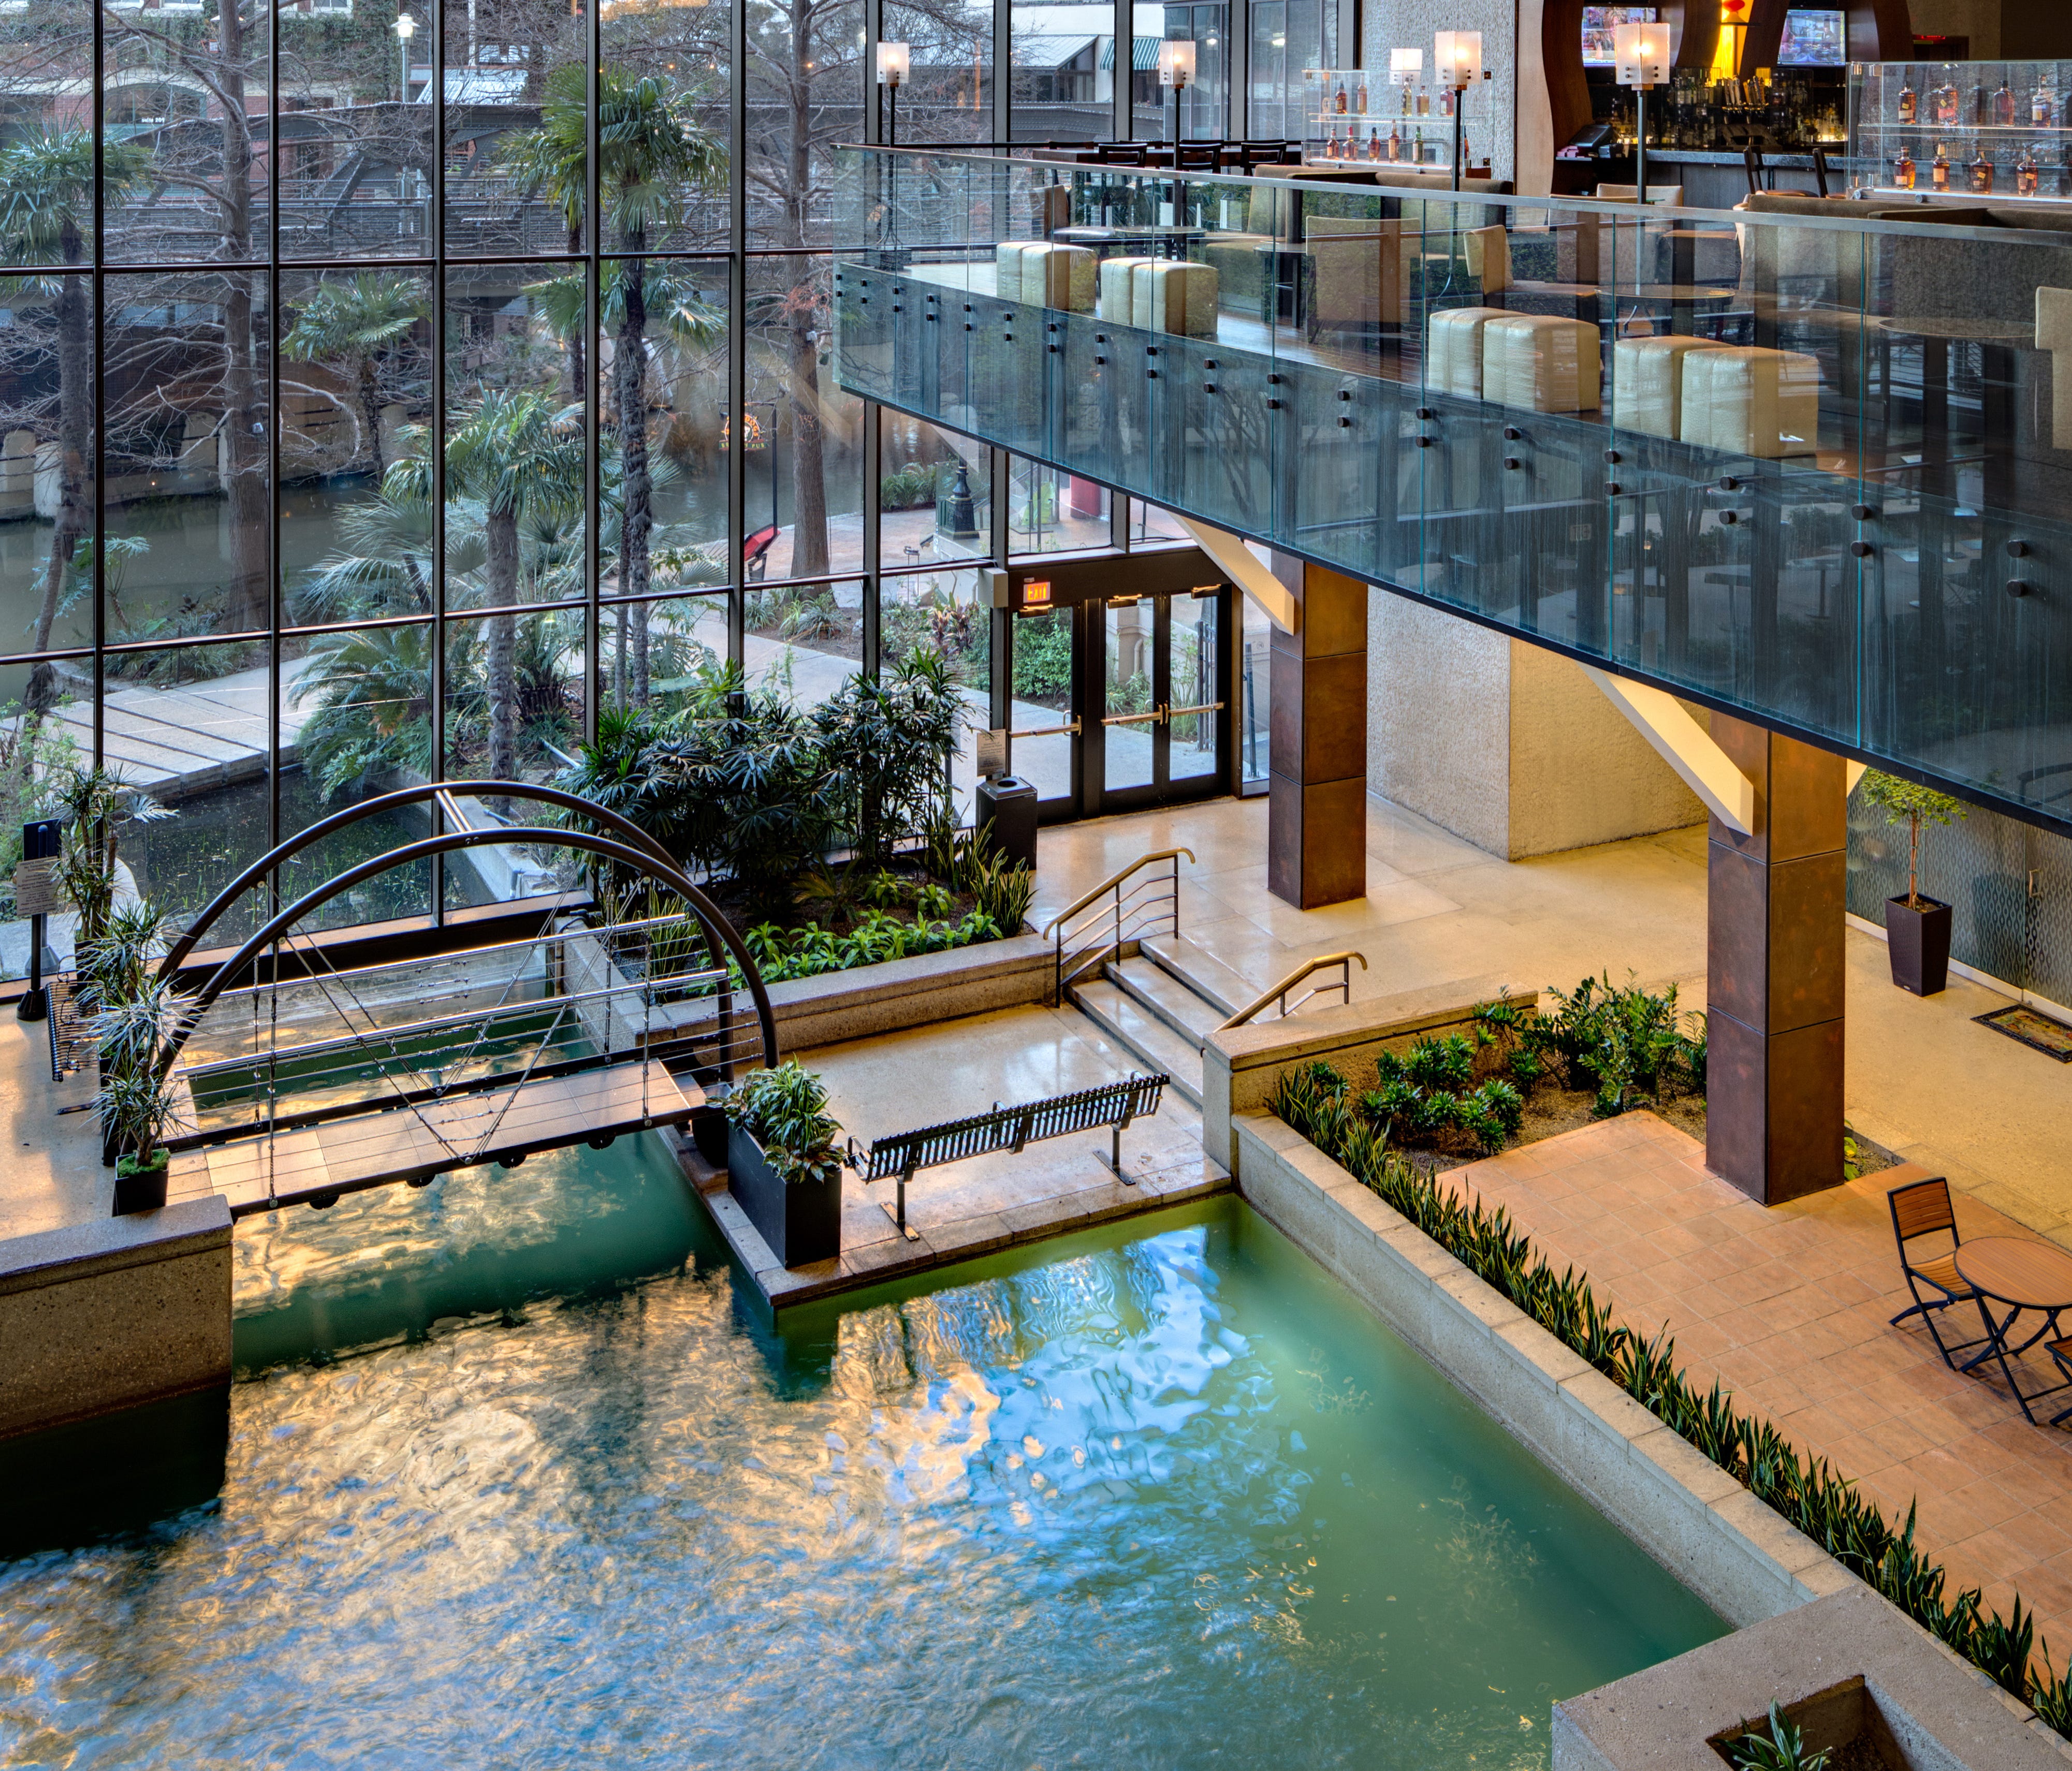 Hyatt Regency San Antonio Riverwalk is the fourth most in demand hotel in the city, according to Expedia.